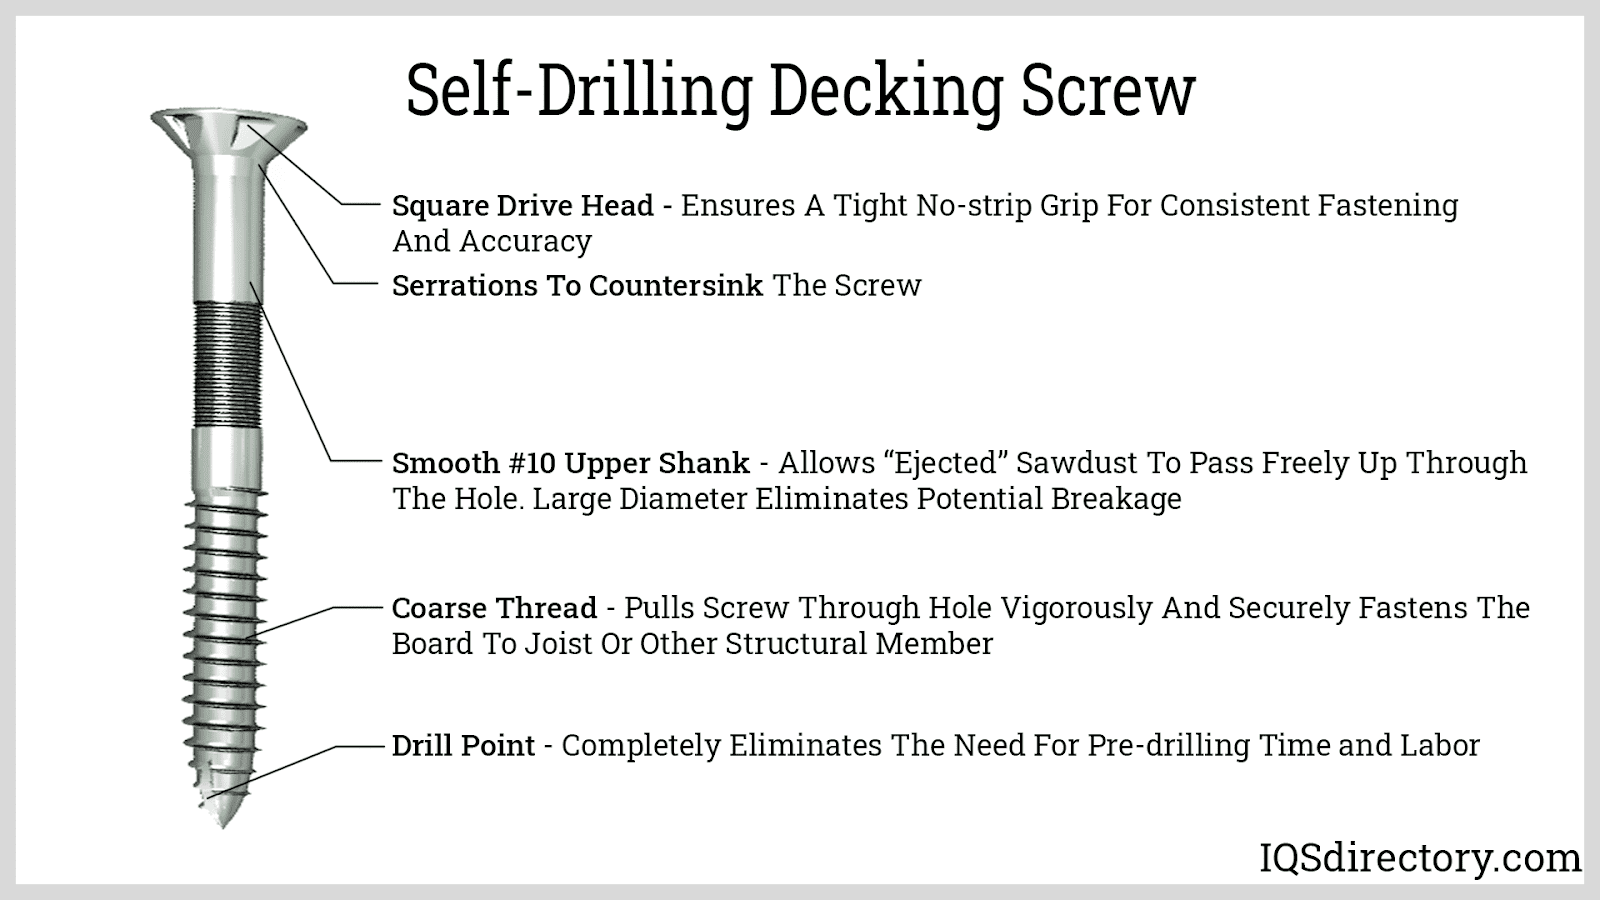 Self-Drilling Decking Screw